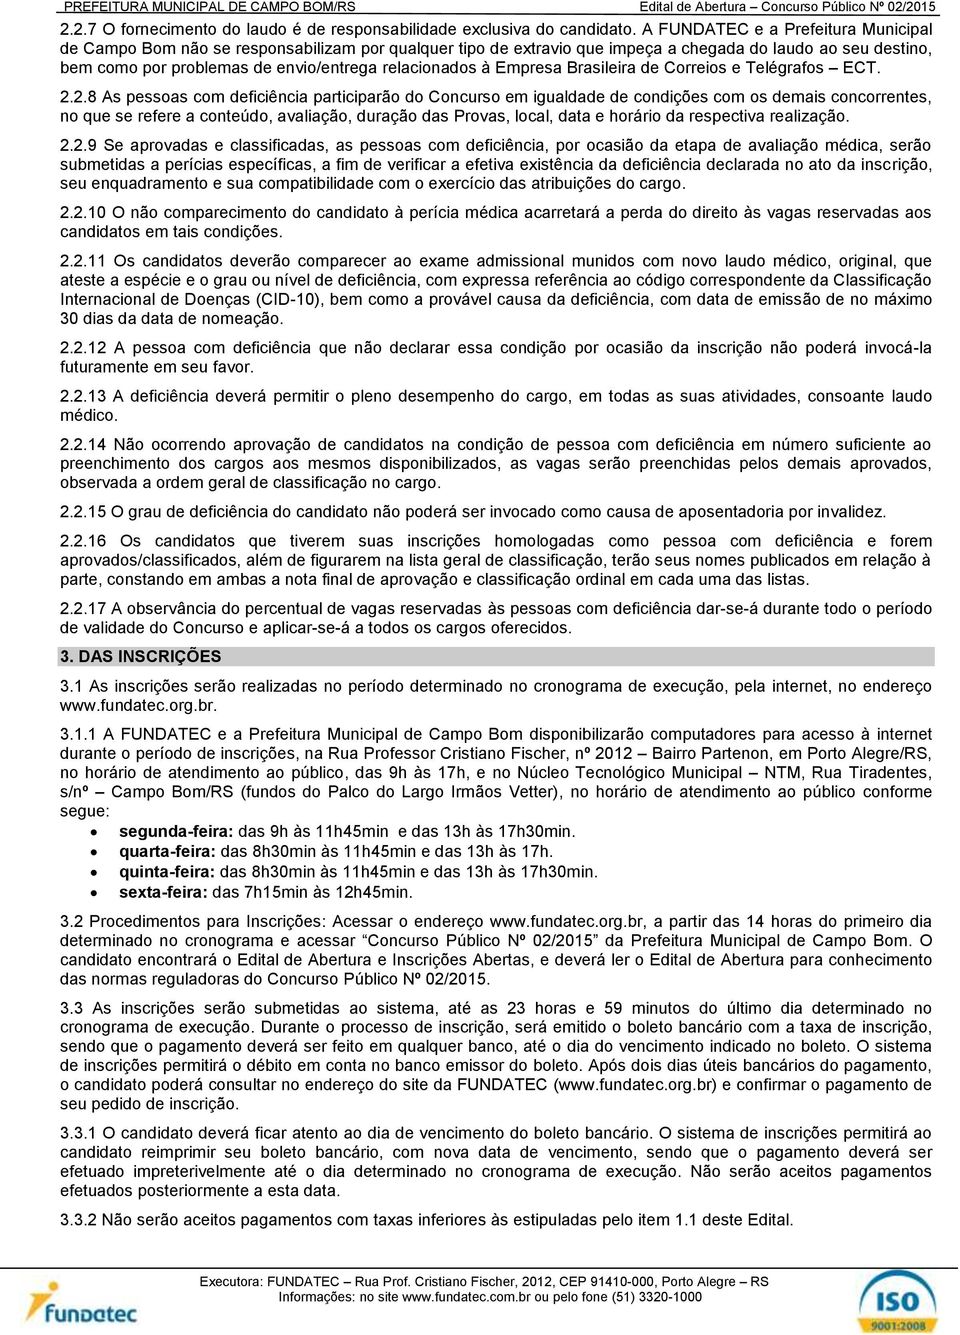 relacionados à Empresa Brasileira de Correios e Telégrafos ECT. 2.